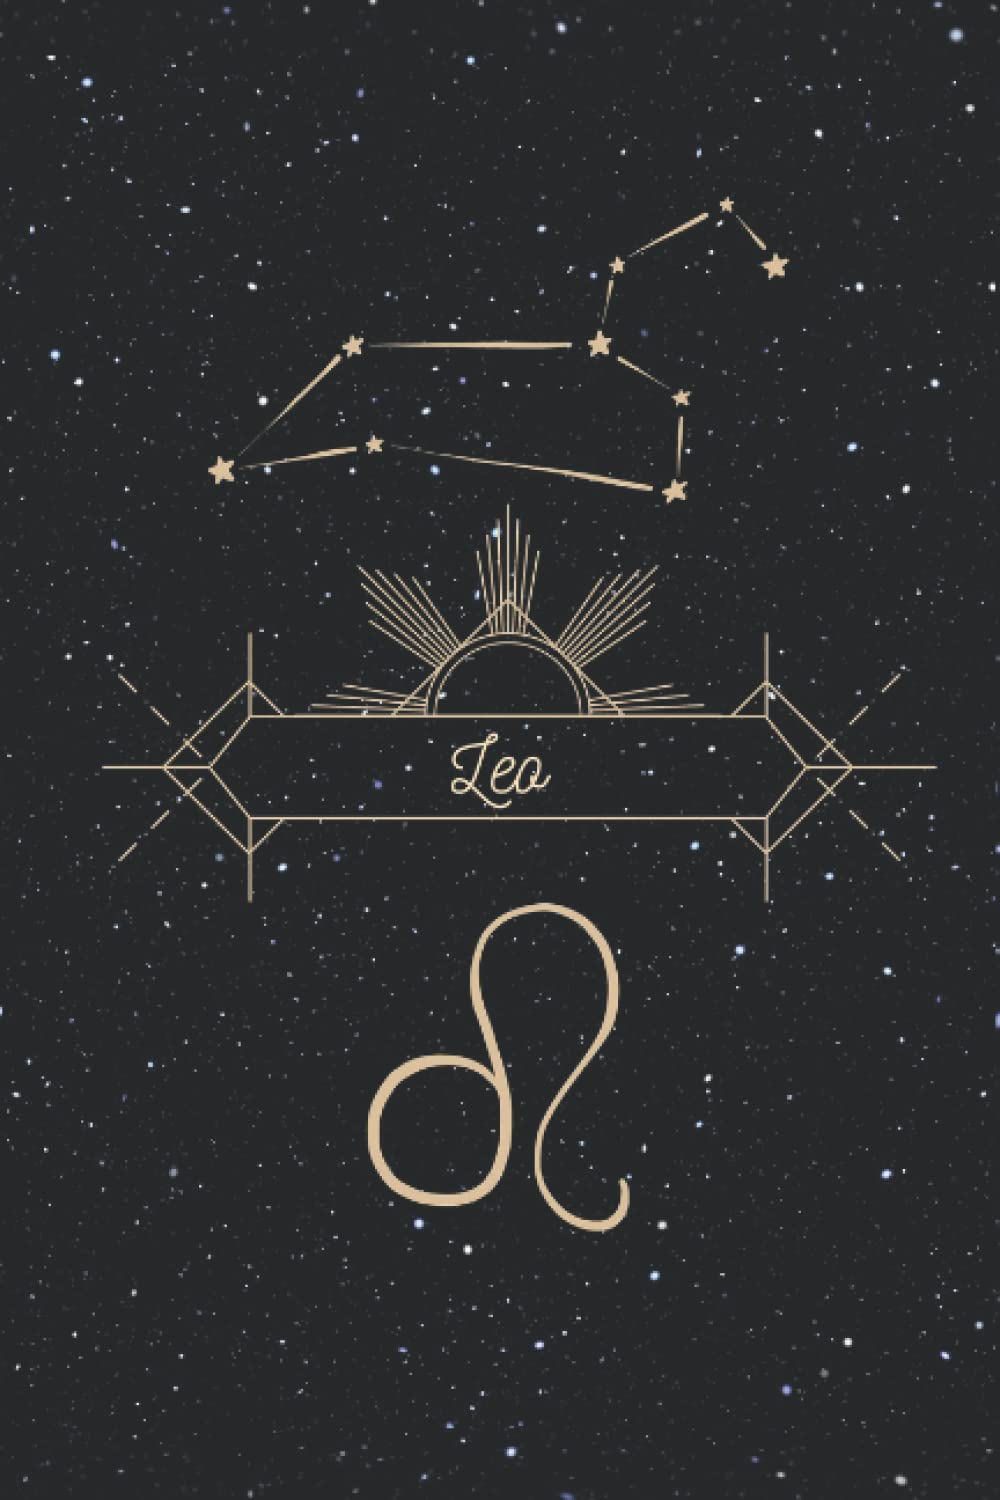 26+] Leo Constellation iPhone Wallpapers - WallpaperSafari